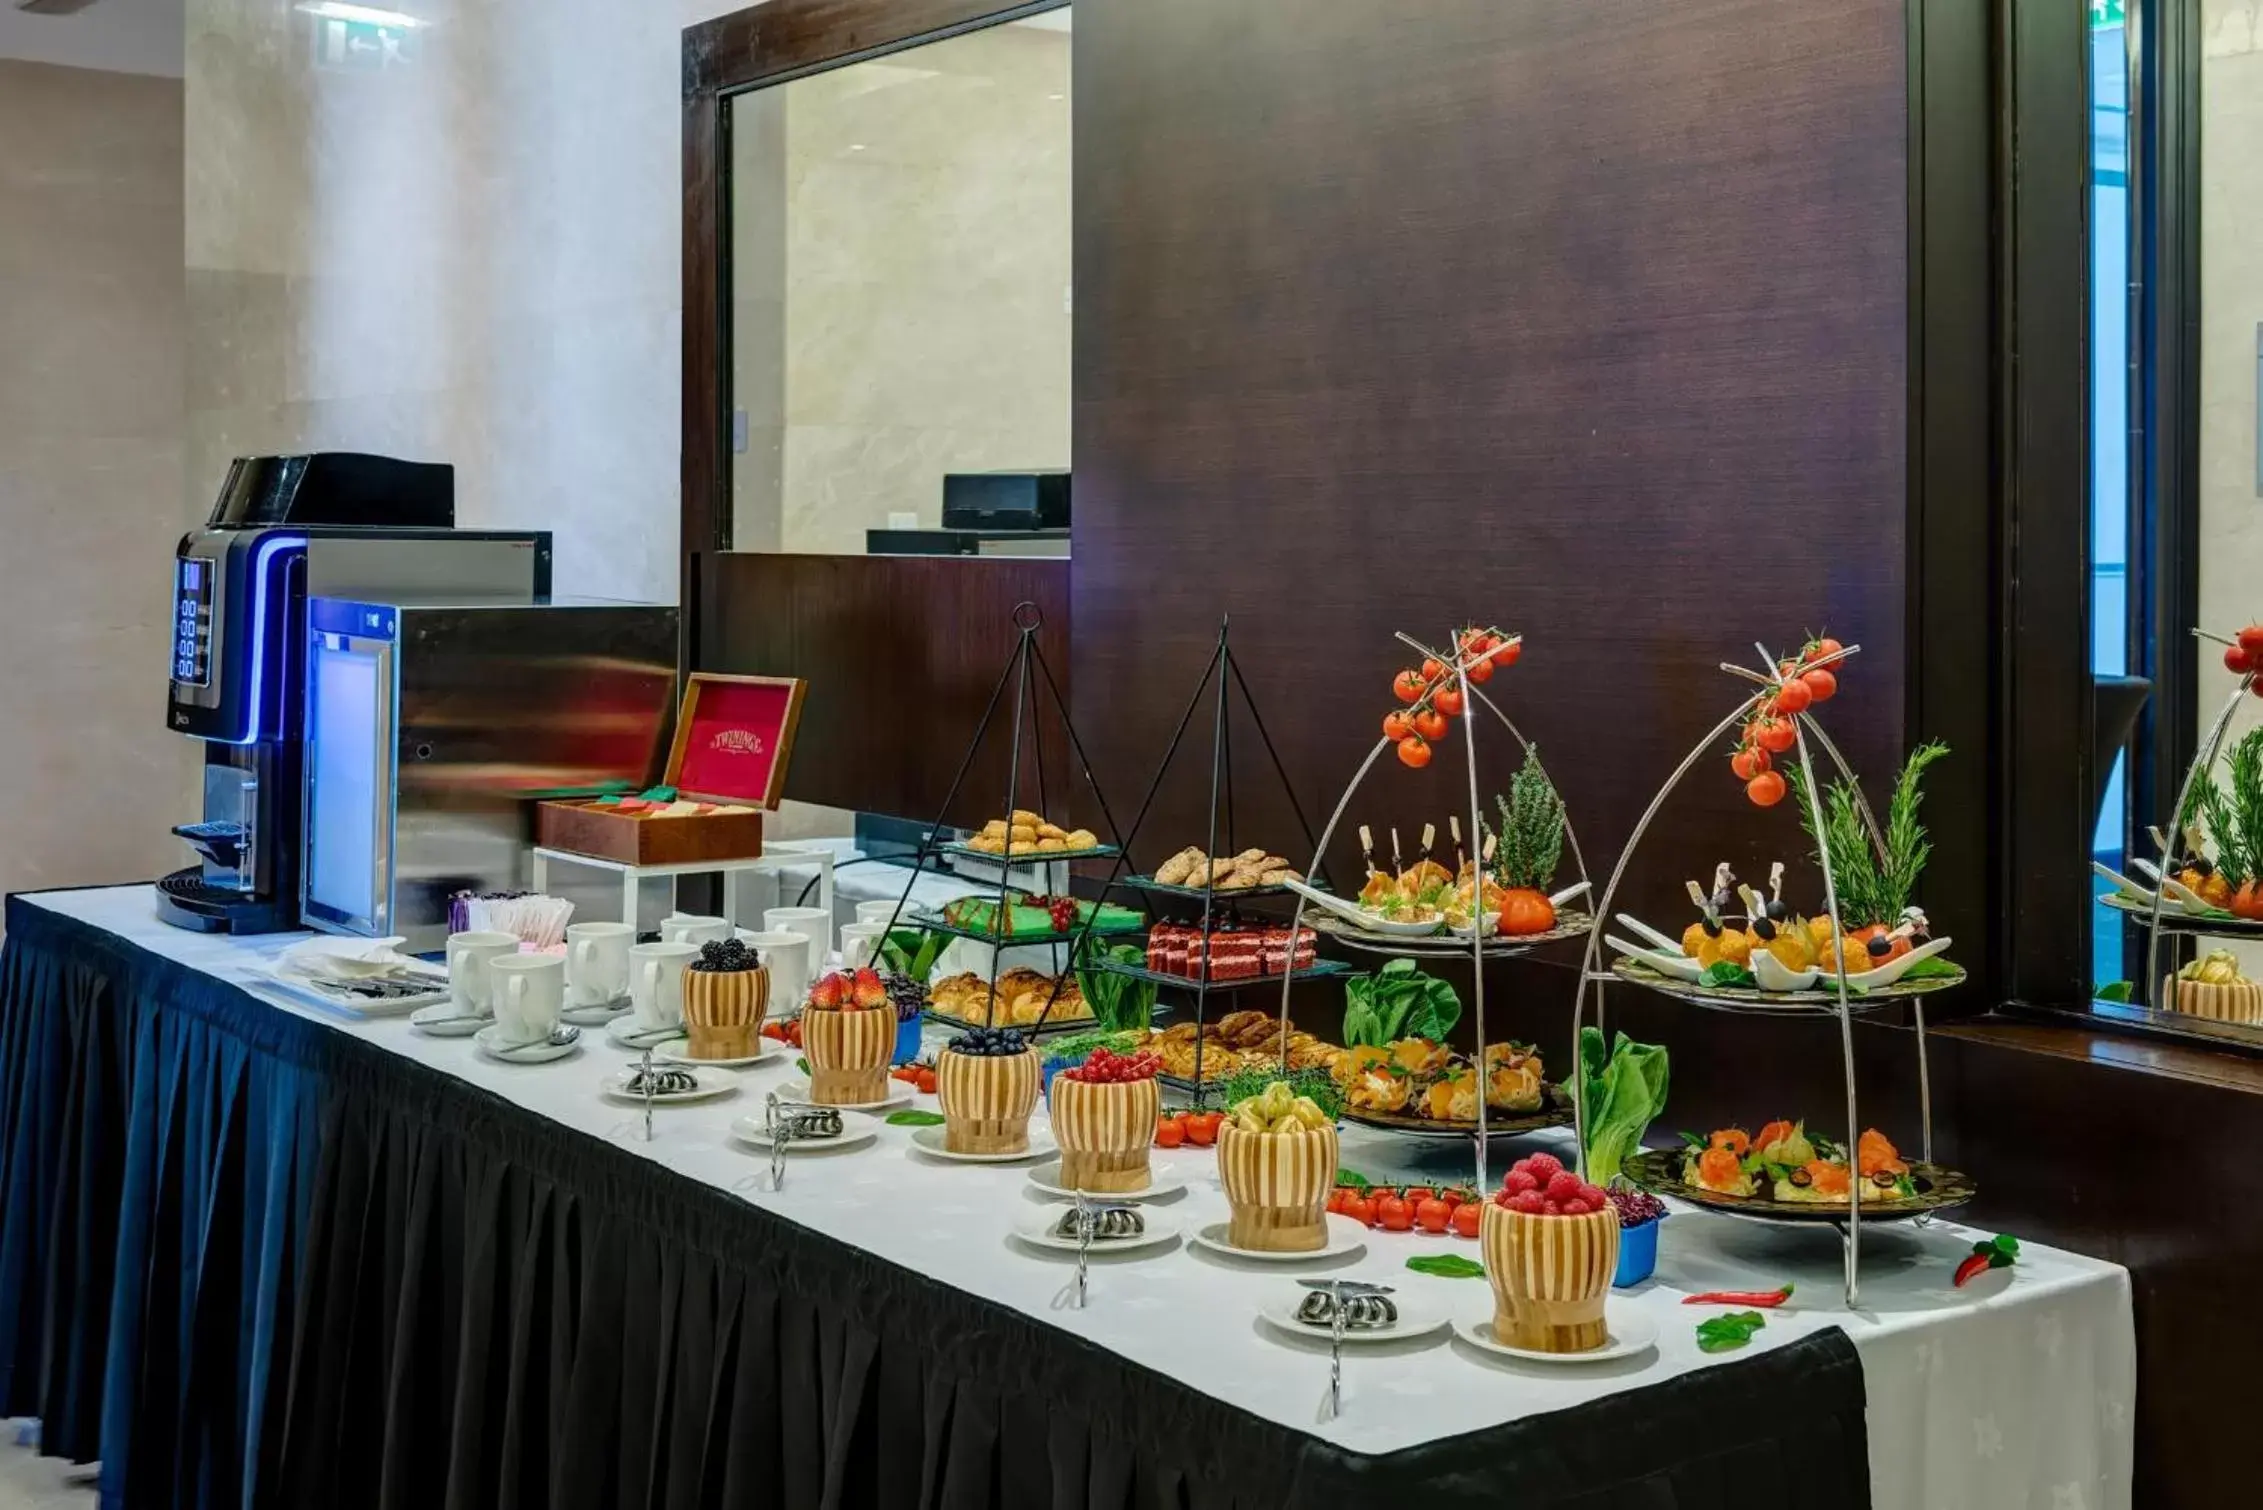 Buffet breakfast in Mercure Gold Hotel, Jumeirah, Dubai